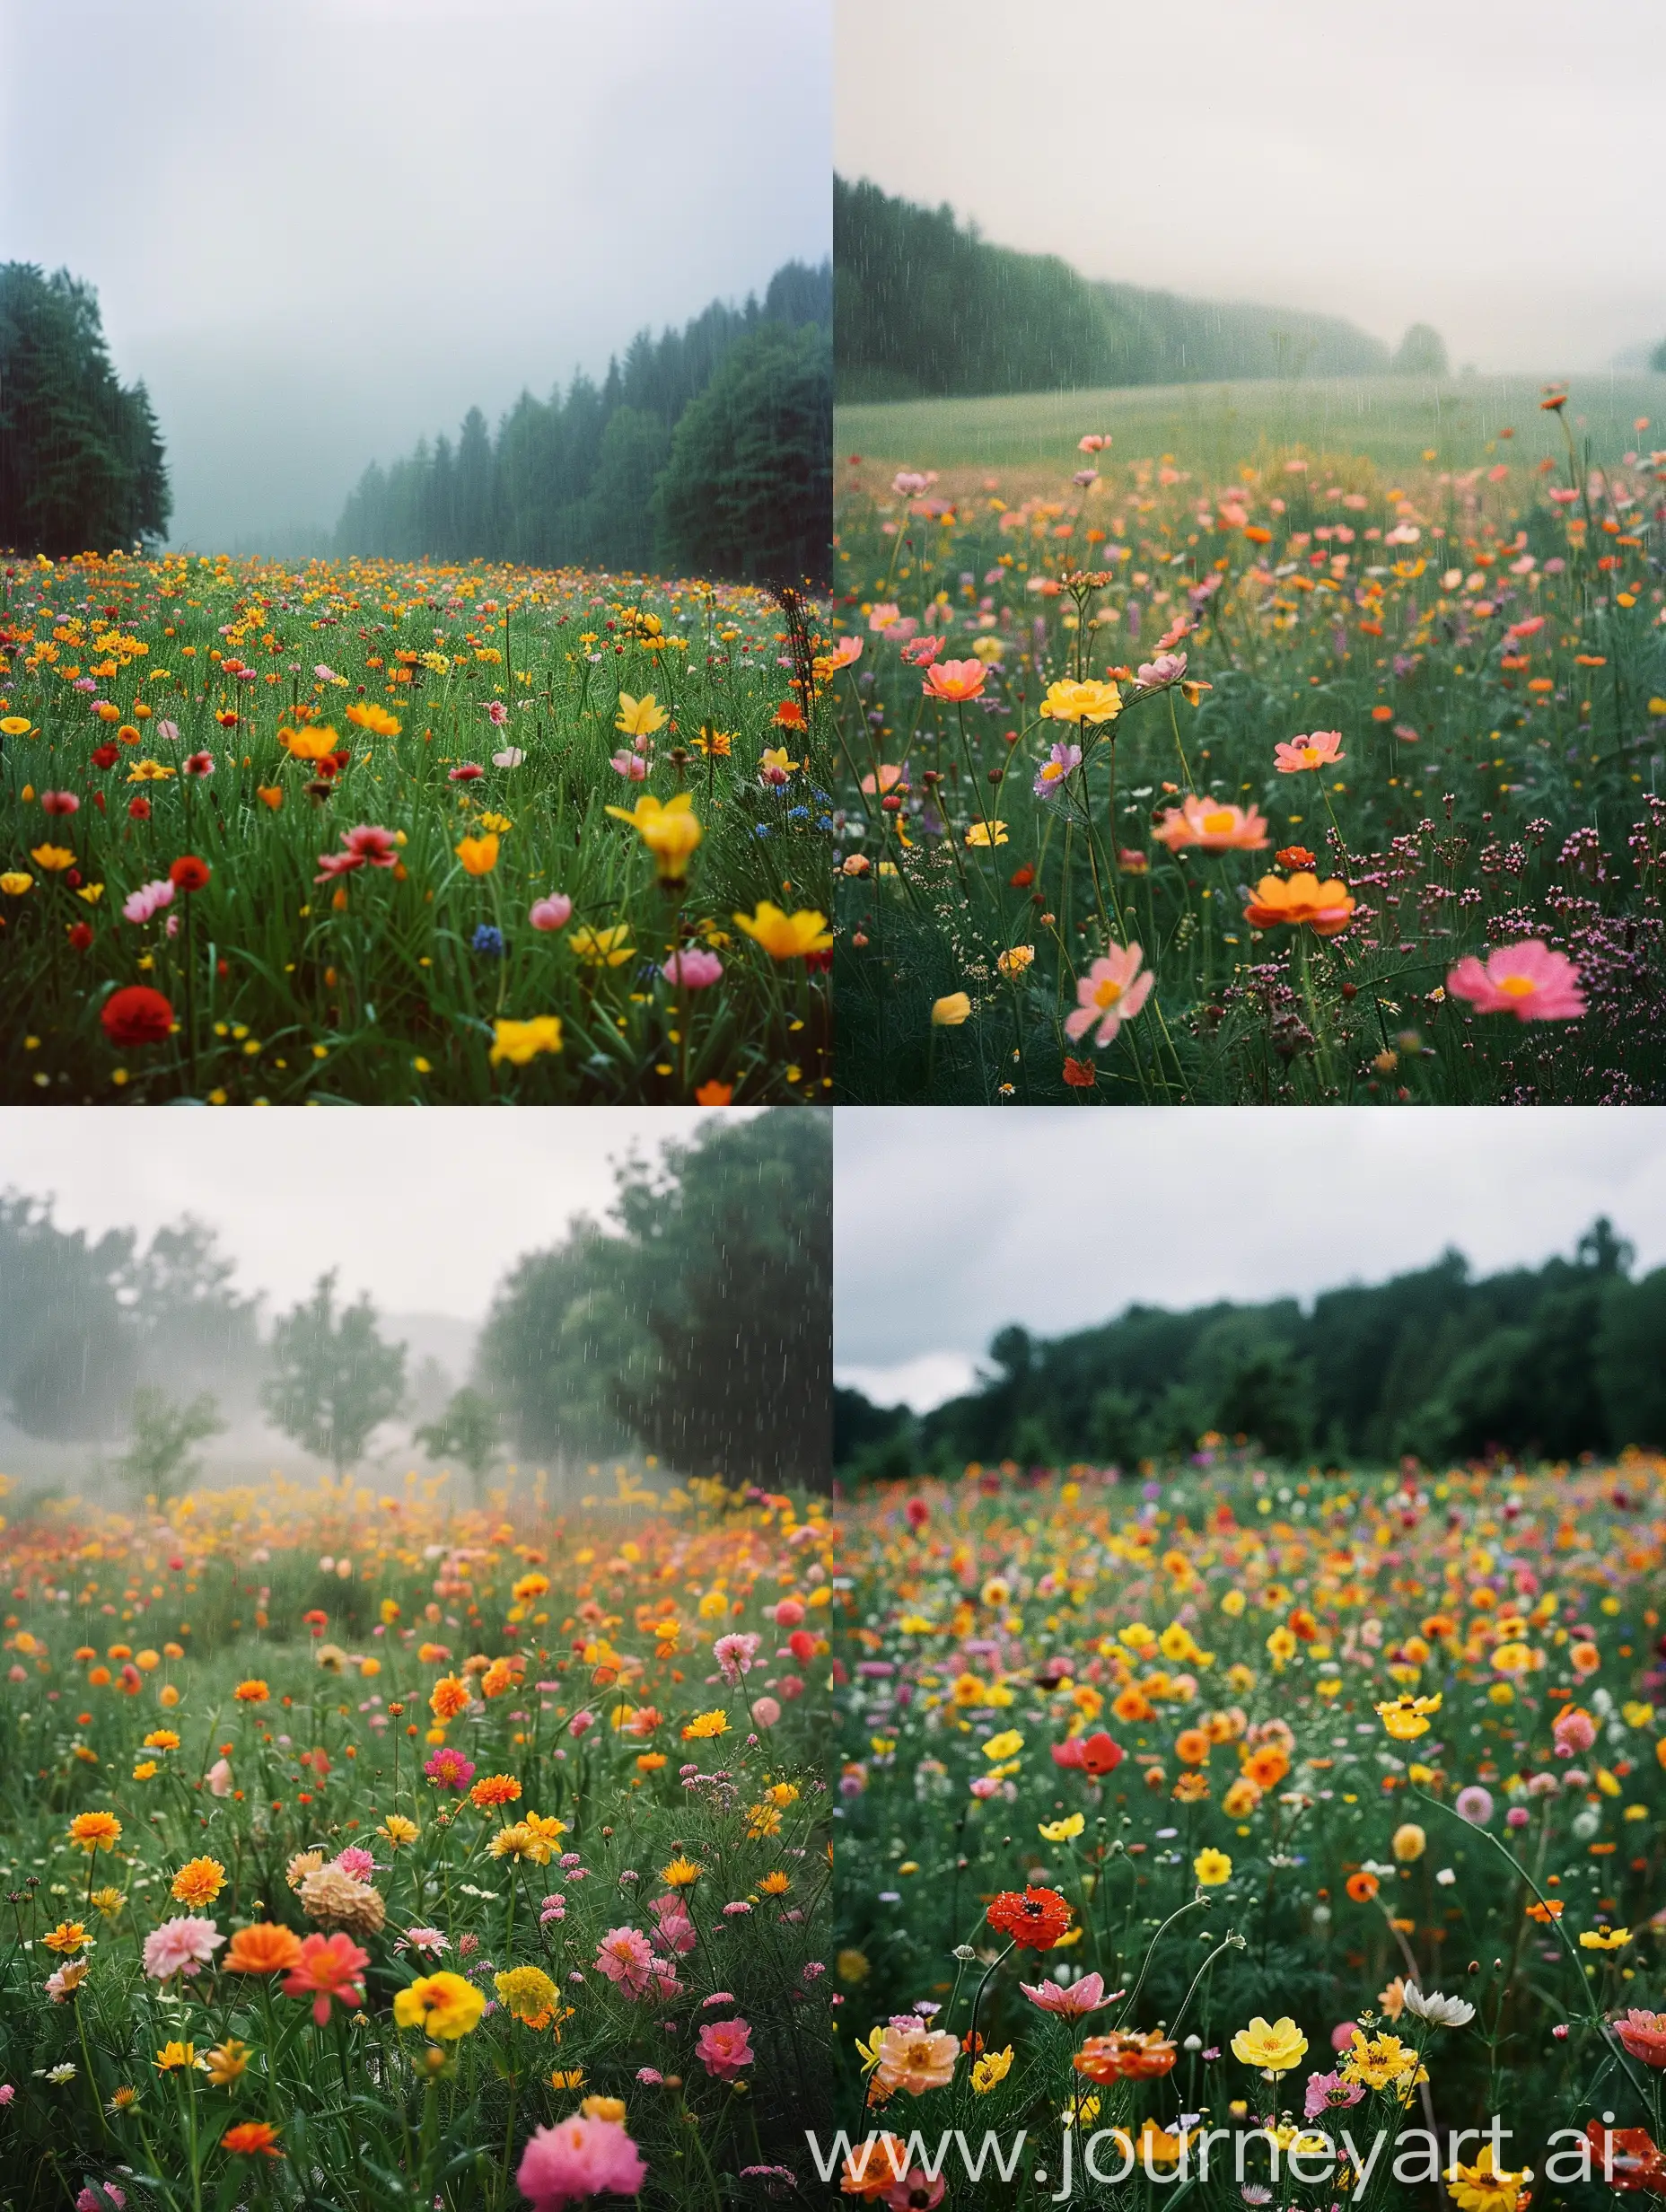 Spring flower field in rainy weather using kodak portra 400 with 35mm film